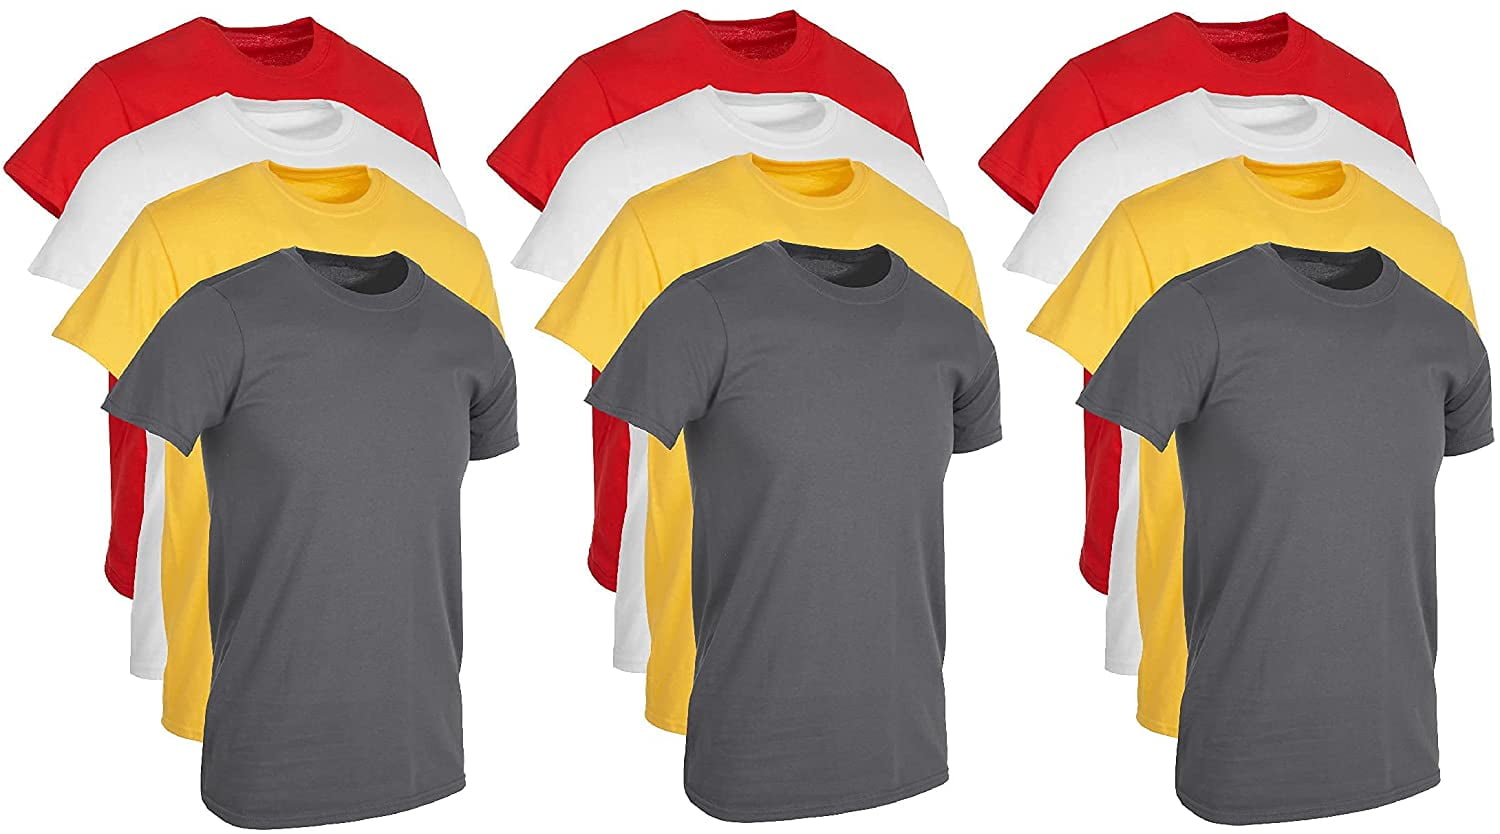 BILLIONHATS T-Shirts - Size 7X - Plus Size Men's Solid Colors Cotton T-Shirts  Short Sleeve Lightweight Big Tall Tees, Bulk (8 Pack, 7X-Large) 